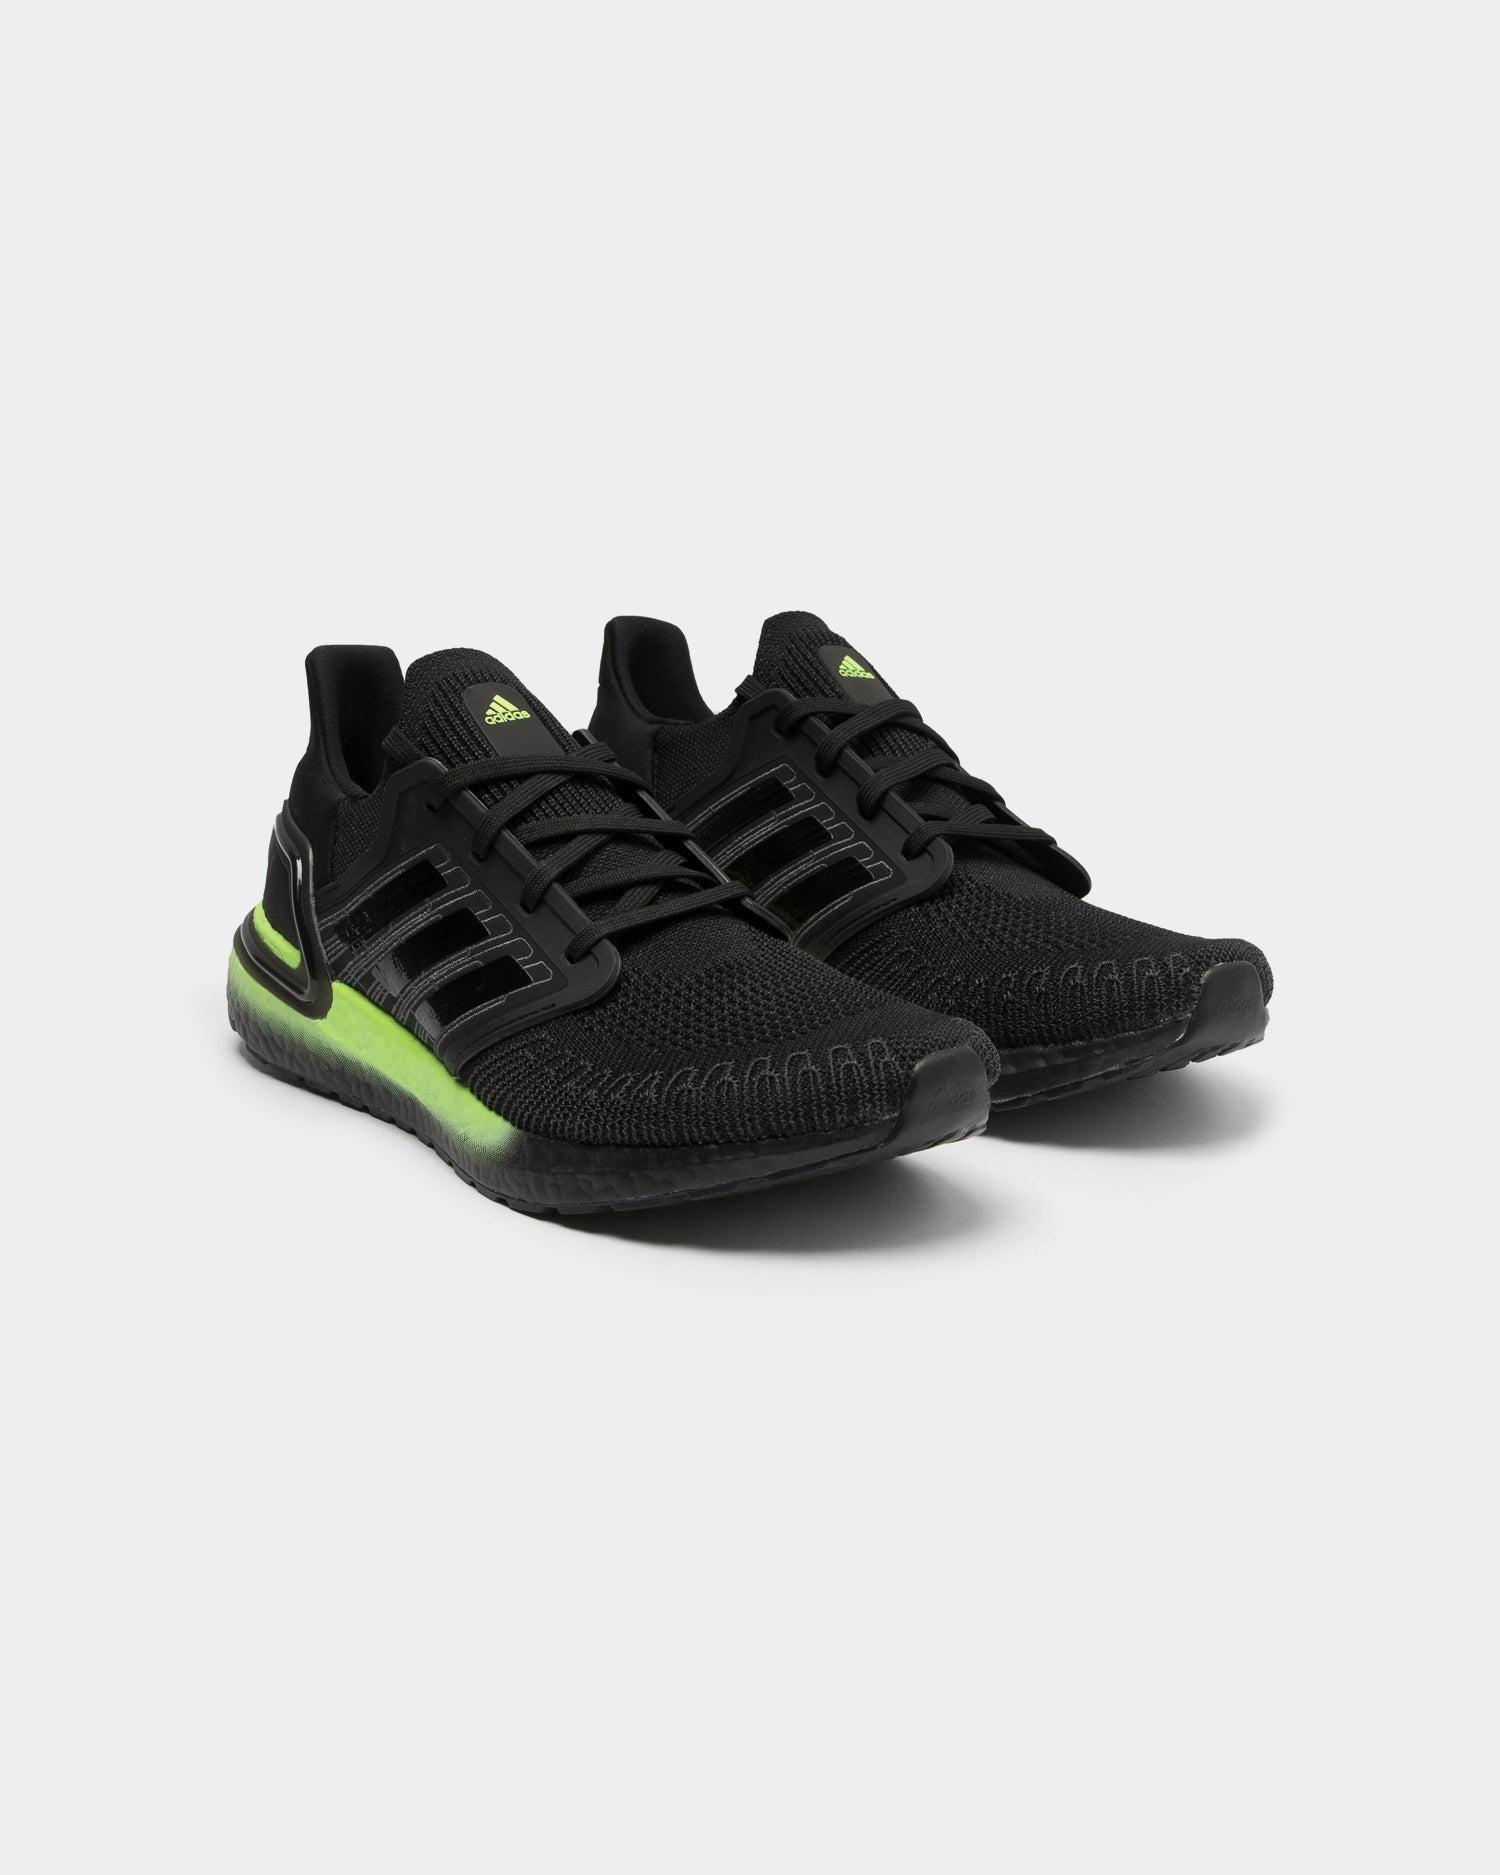 black green adidas